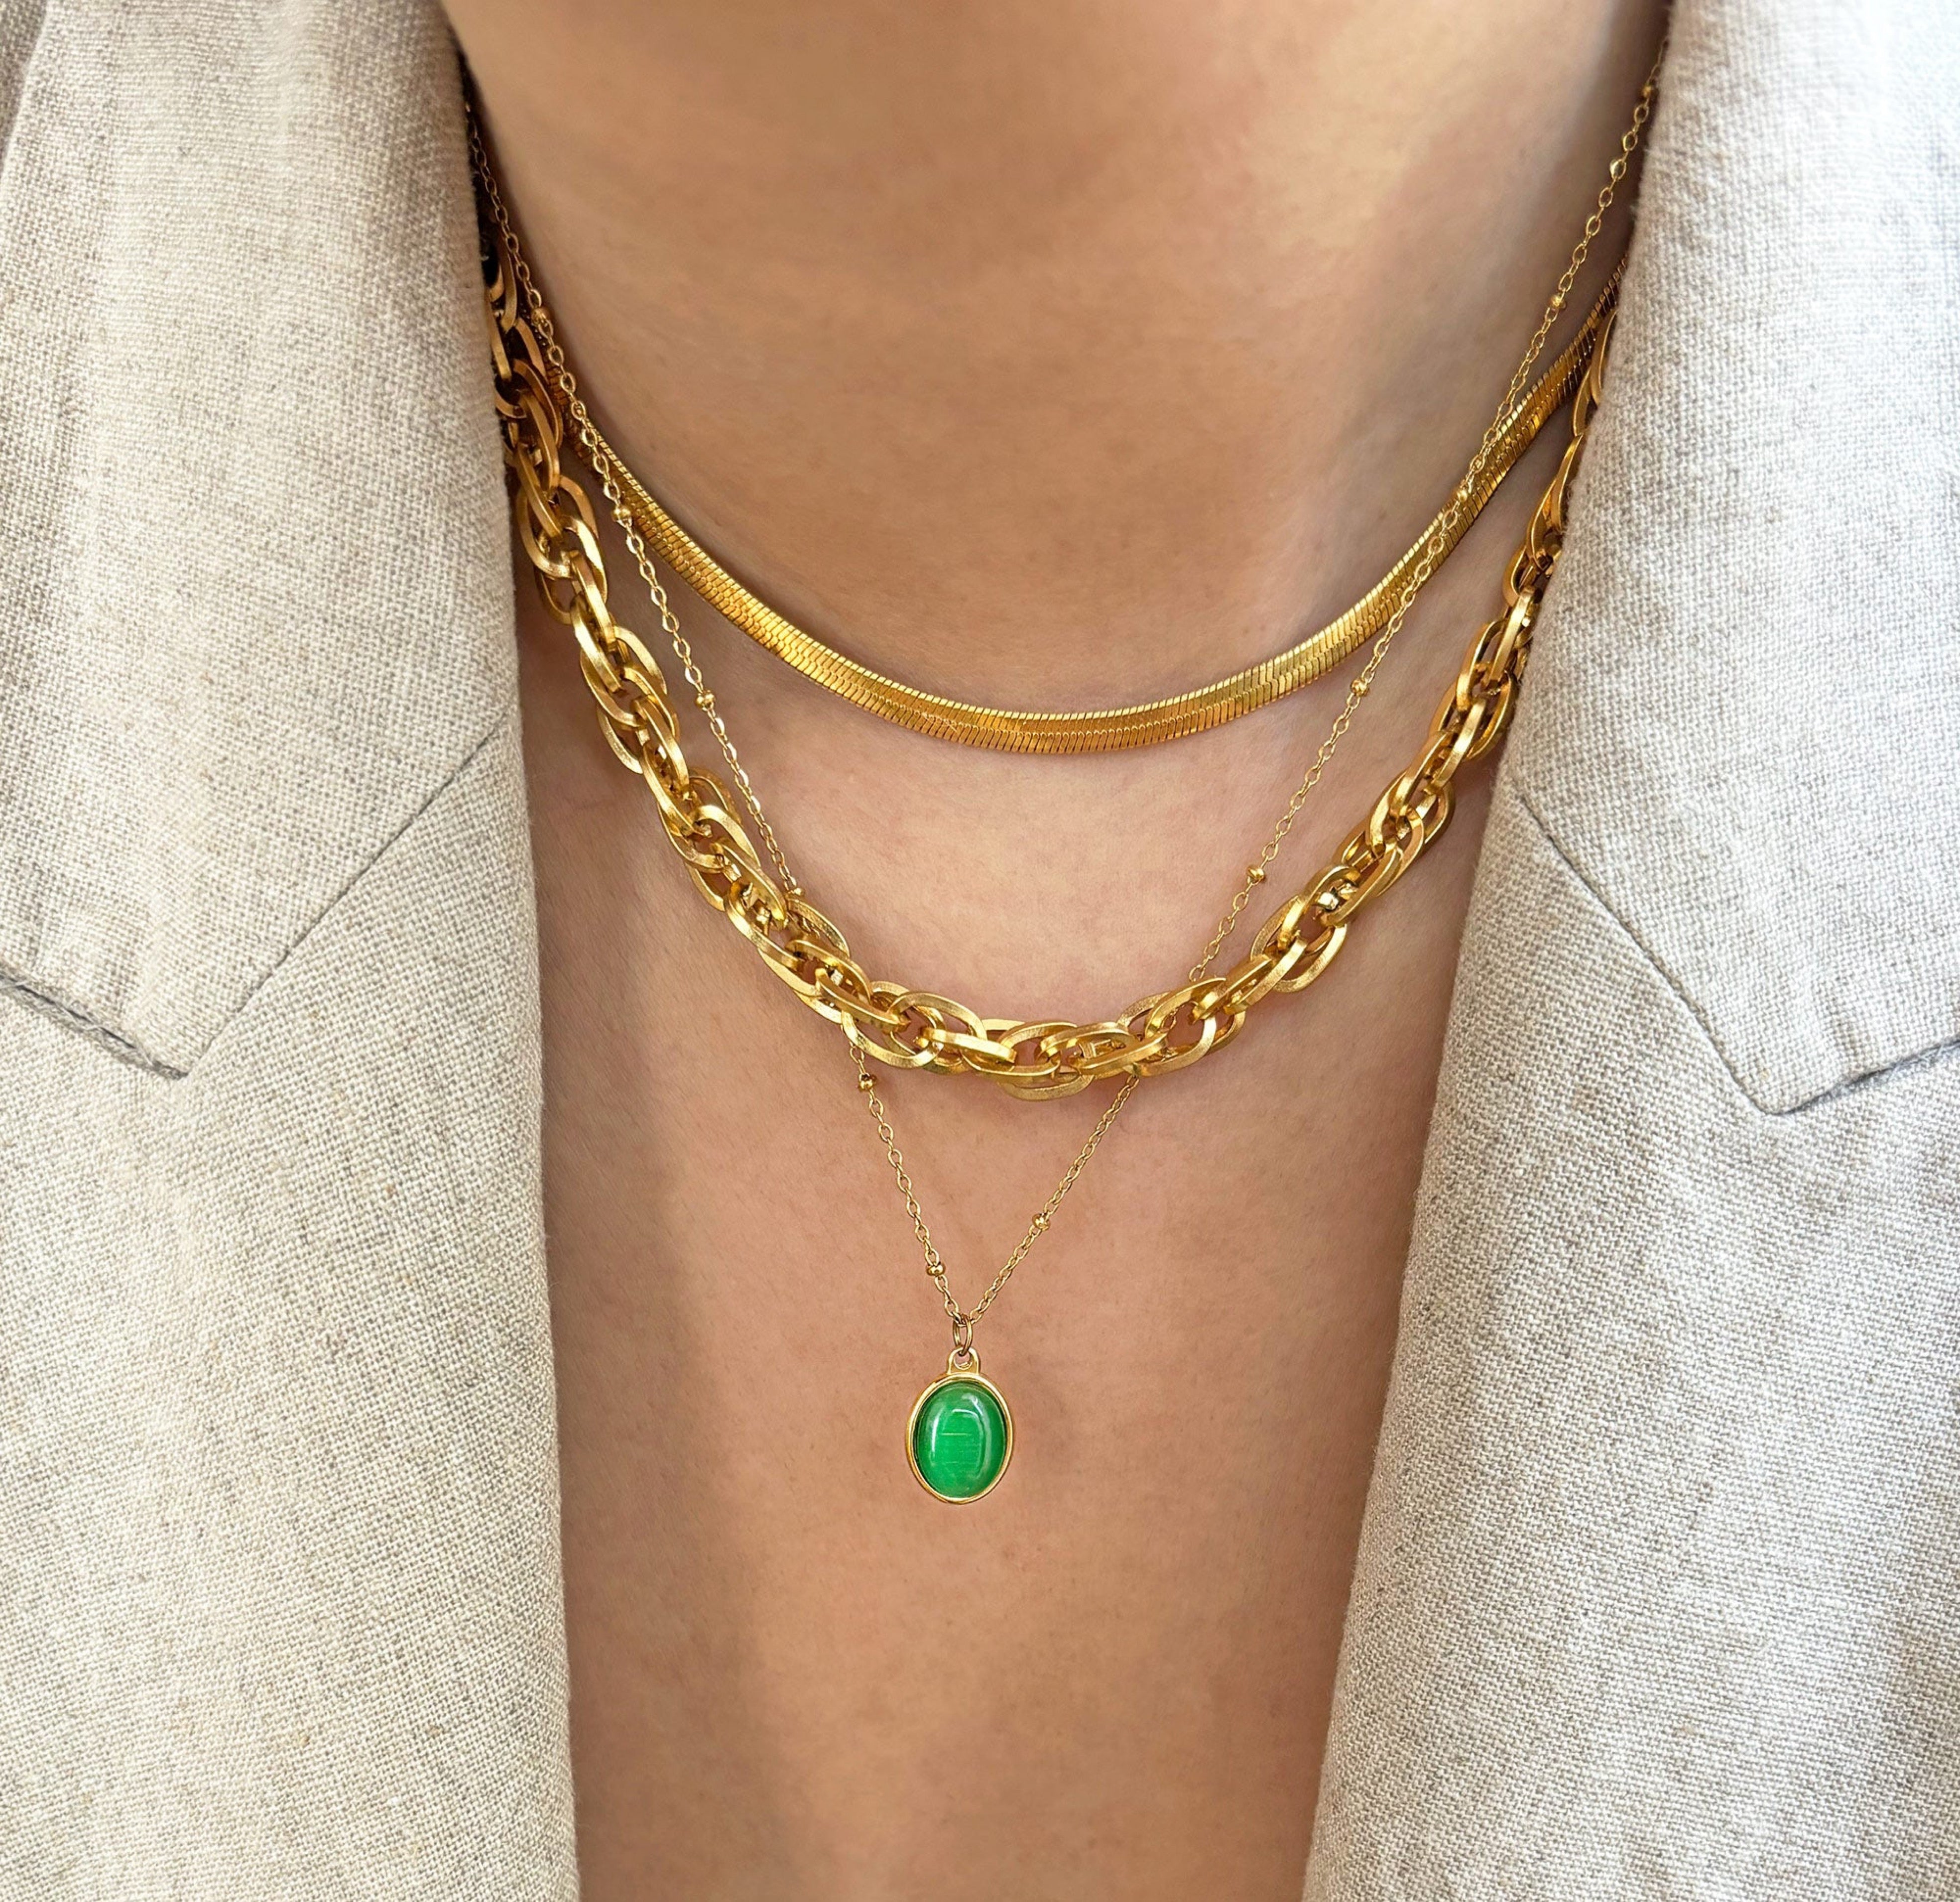 green cats eye oval pendant necklace waterproof jewelry